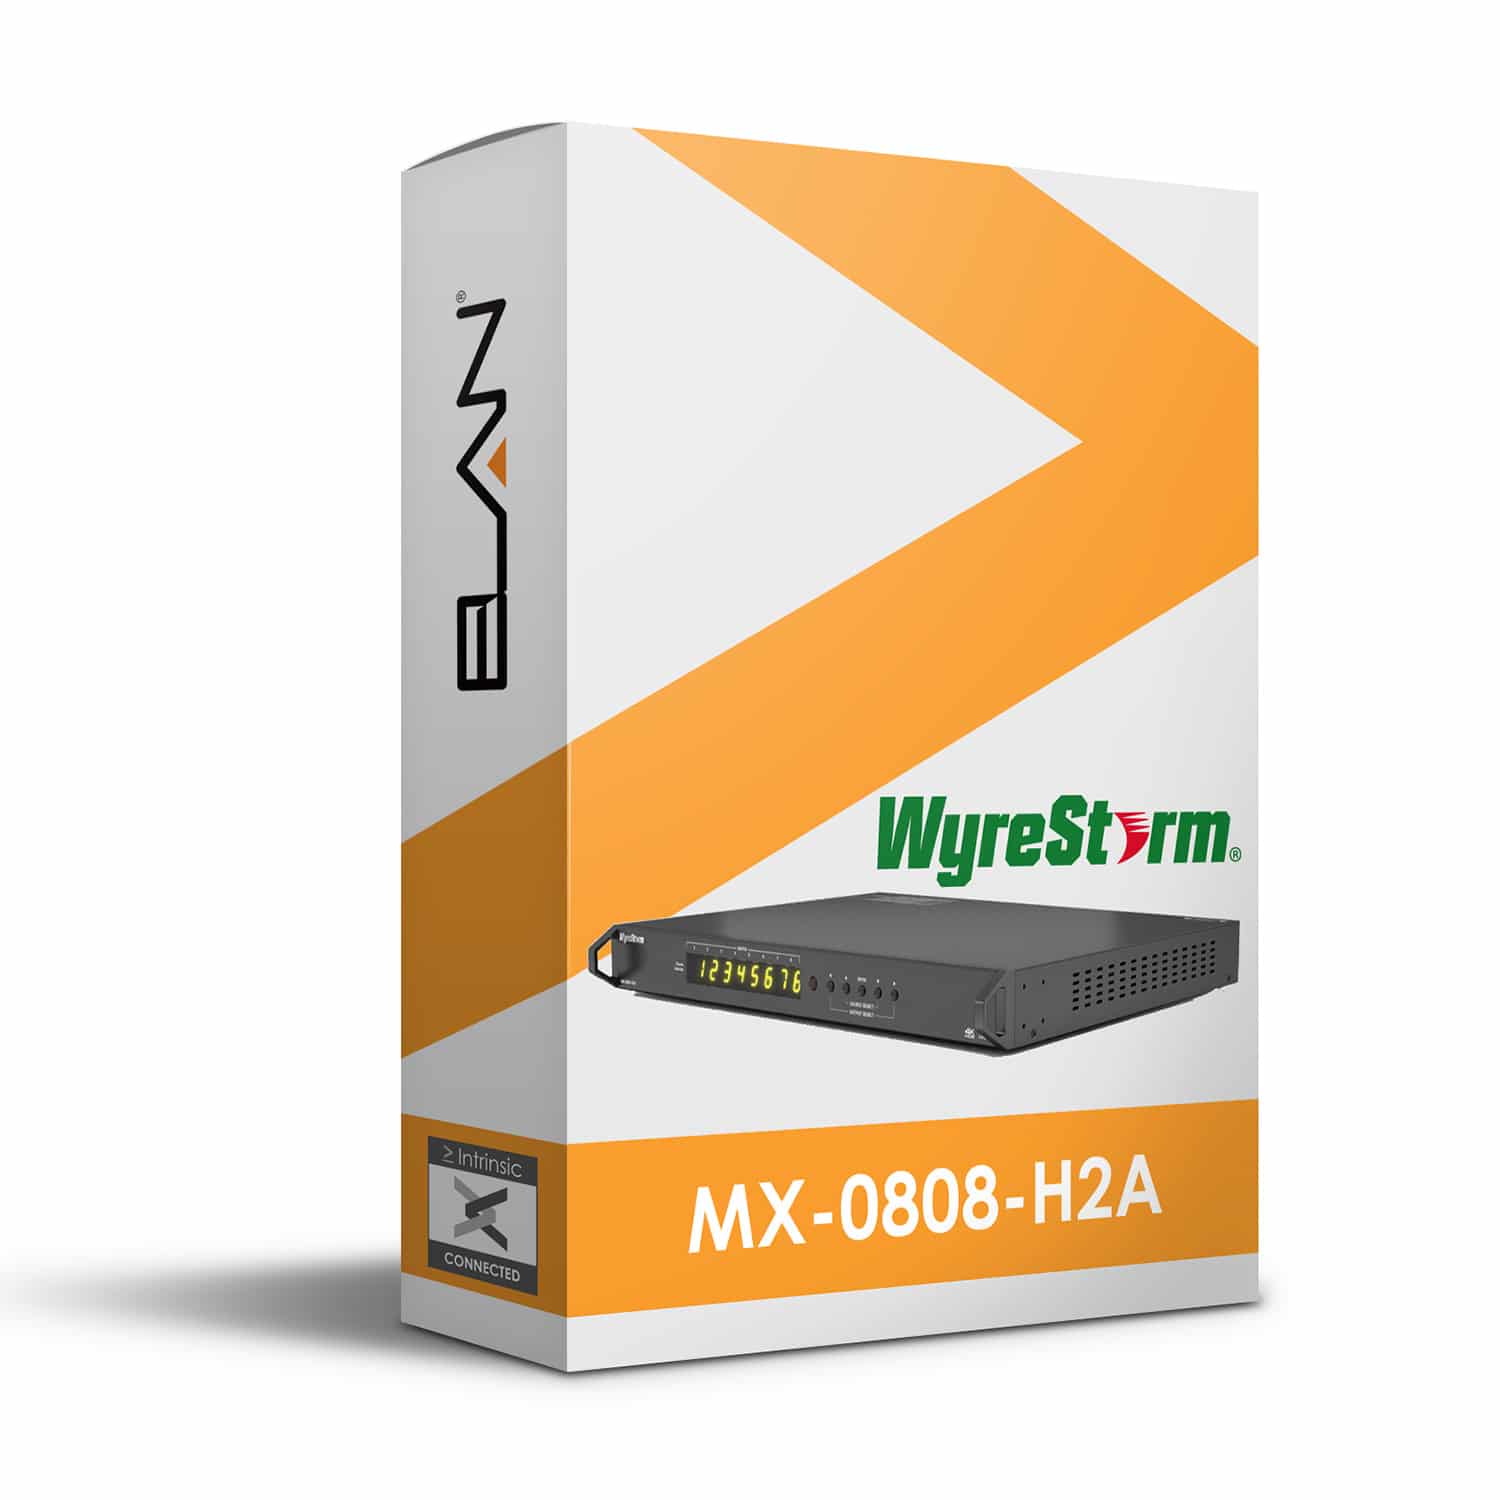 wyrestorm mx-0808-h2a driver for elan